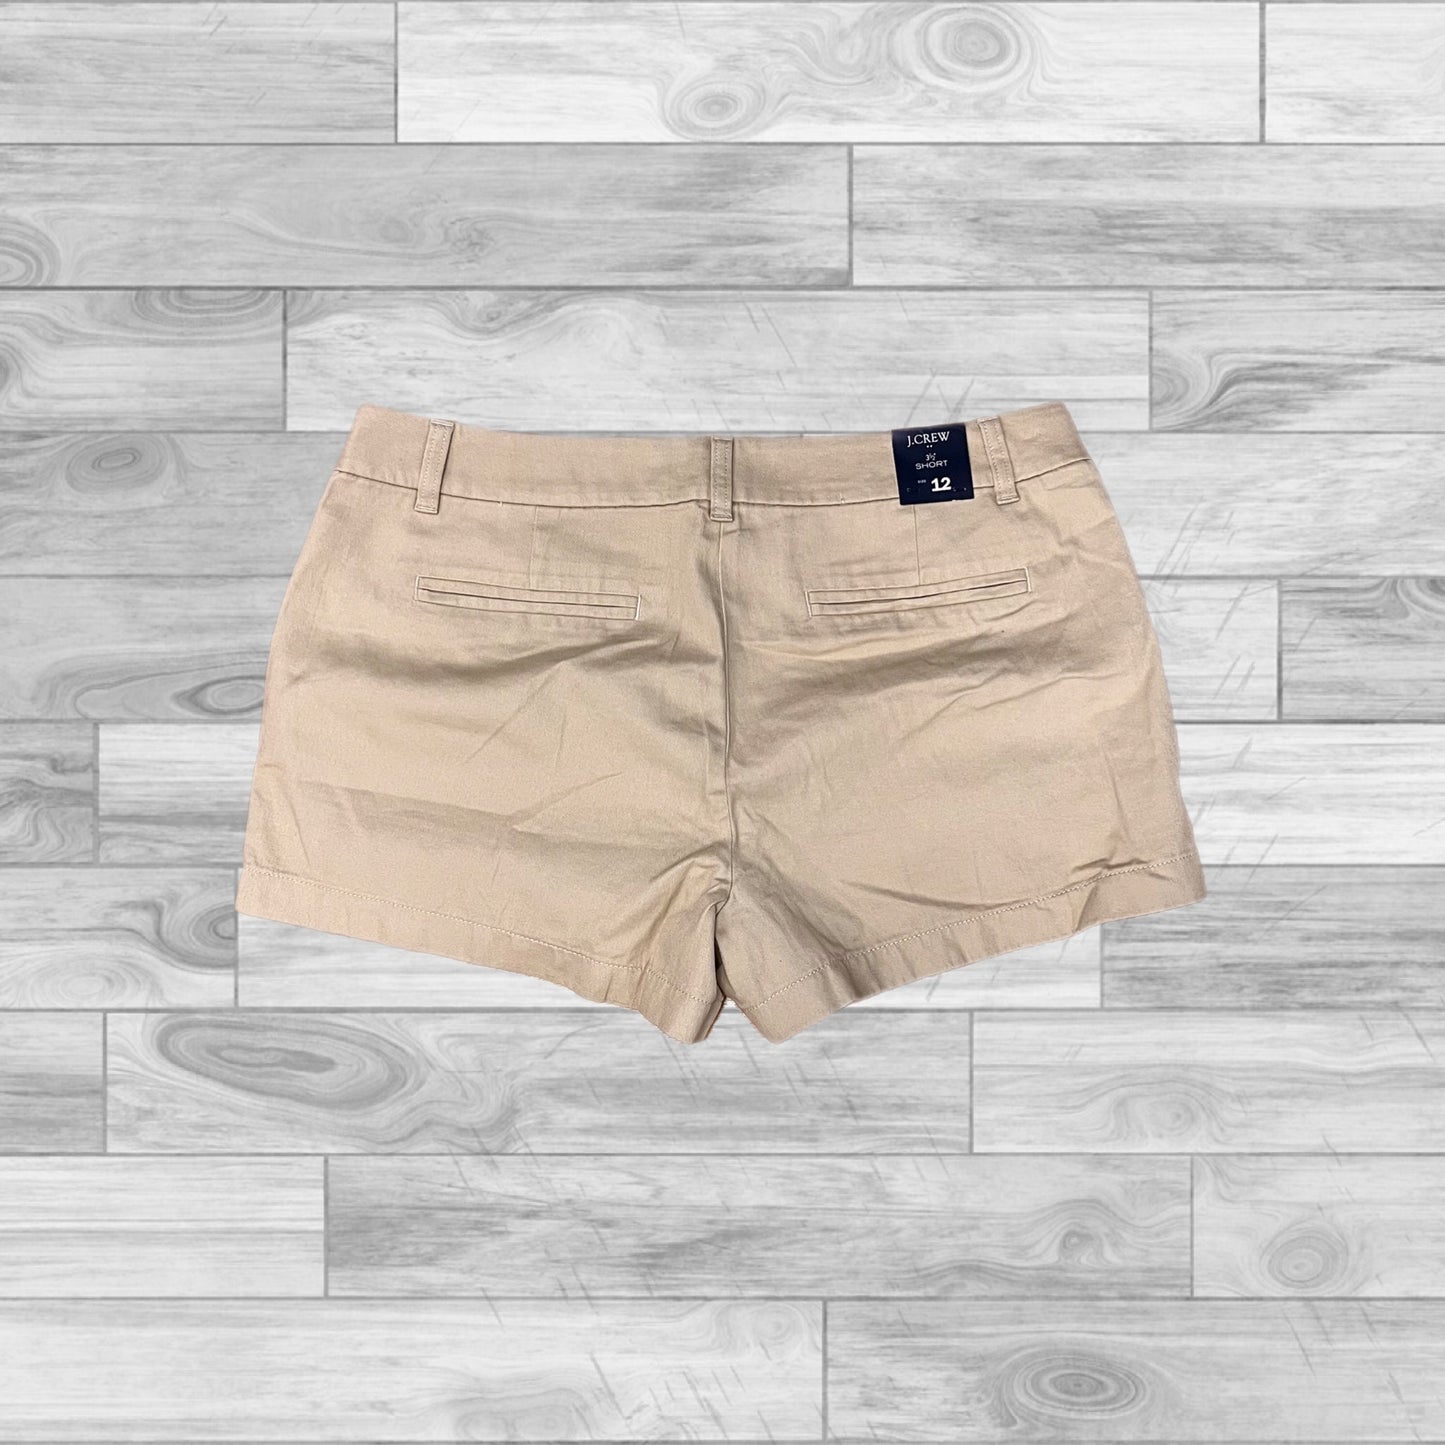 Tan Shorts J. Crew, Size 12